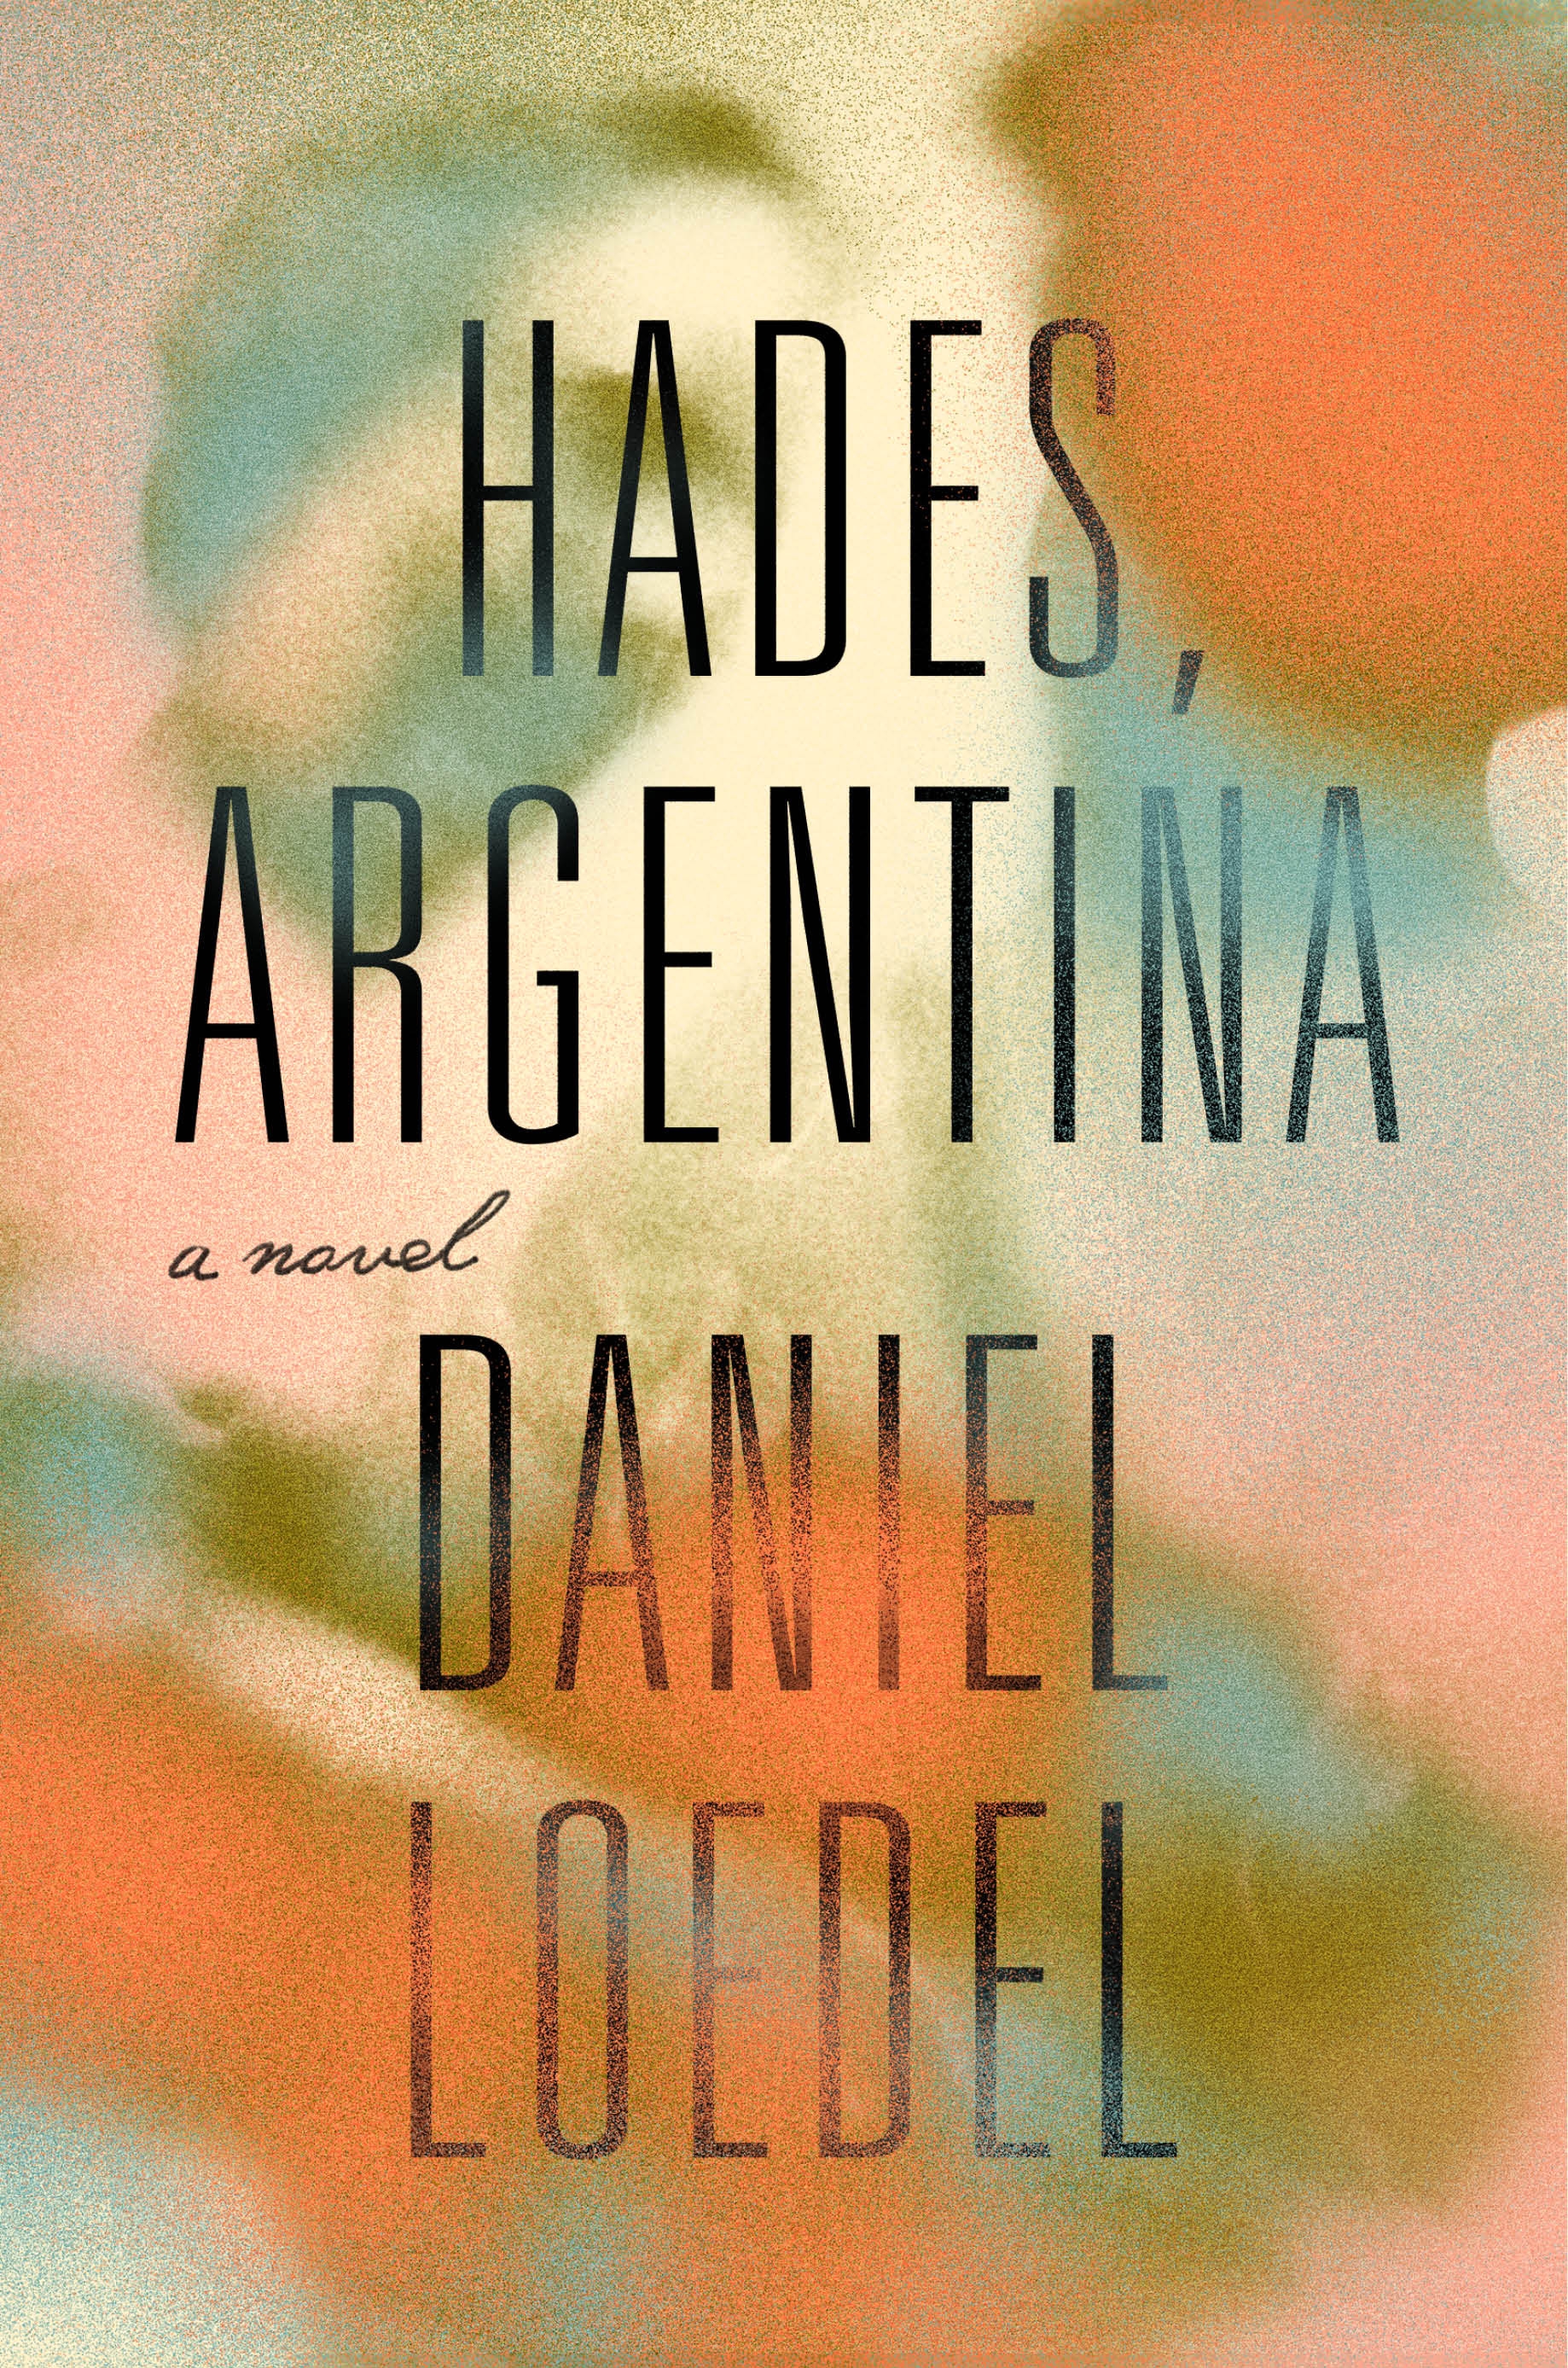 Hades, Argentina by Daniel Loedel - Penguin Books Australia